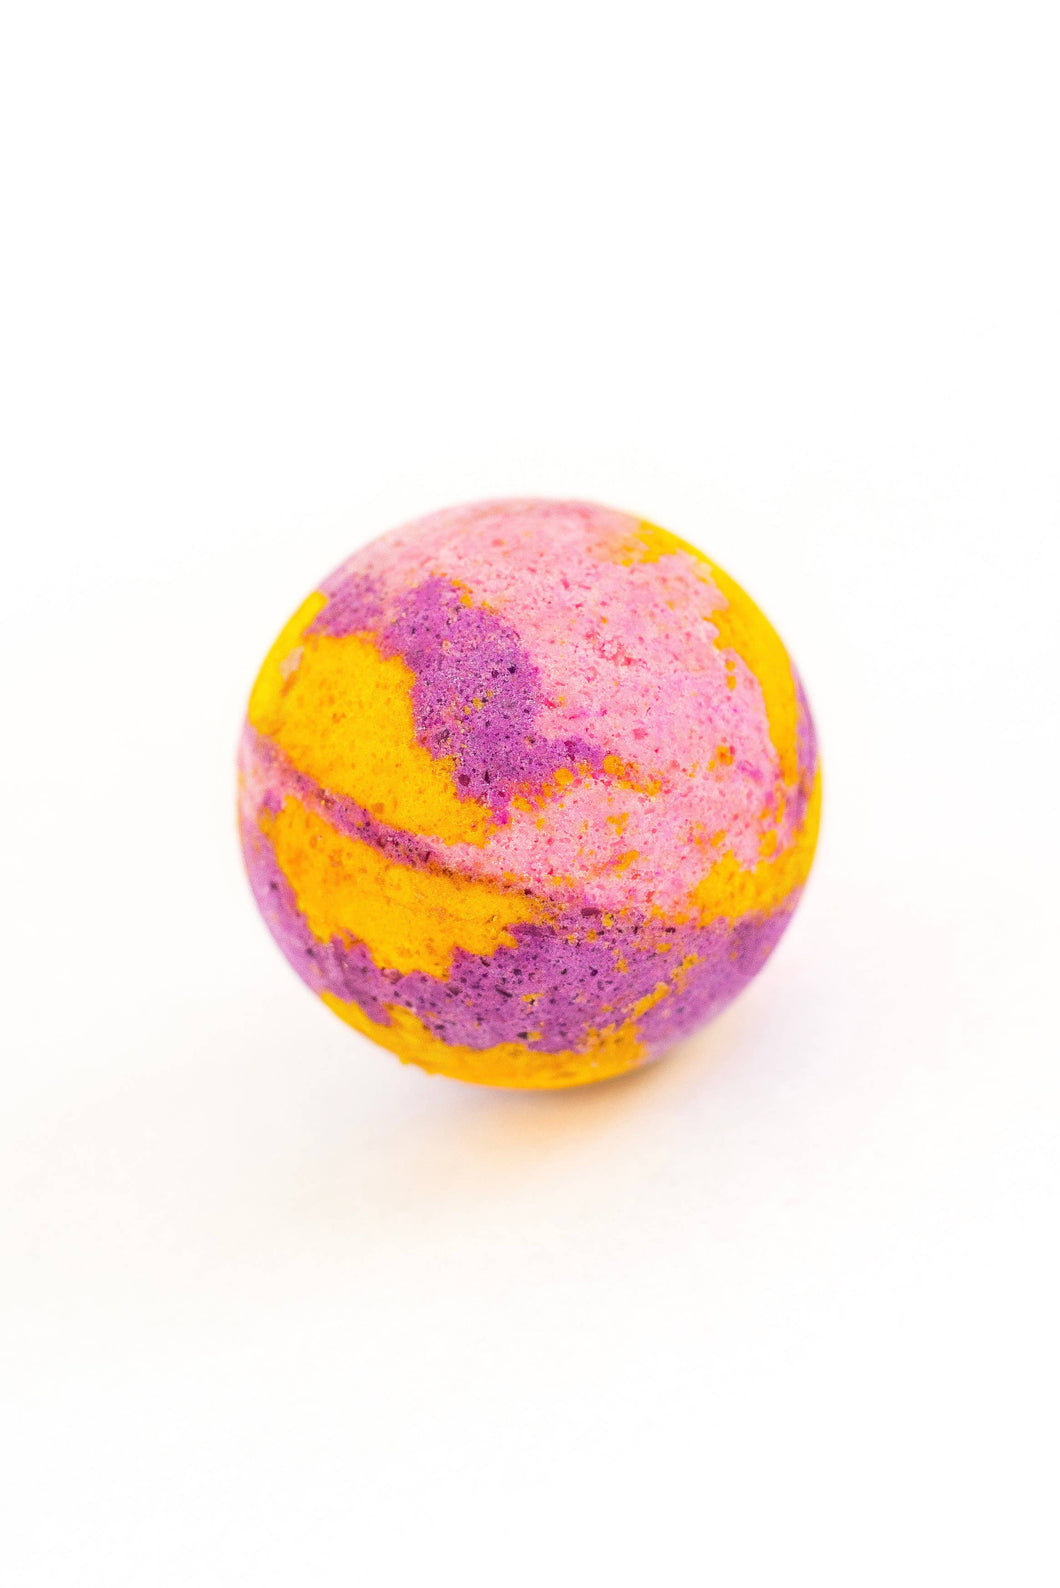 colourful pink purple and orange round bath bomb from soak bath co. 